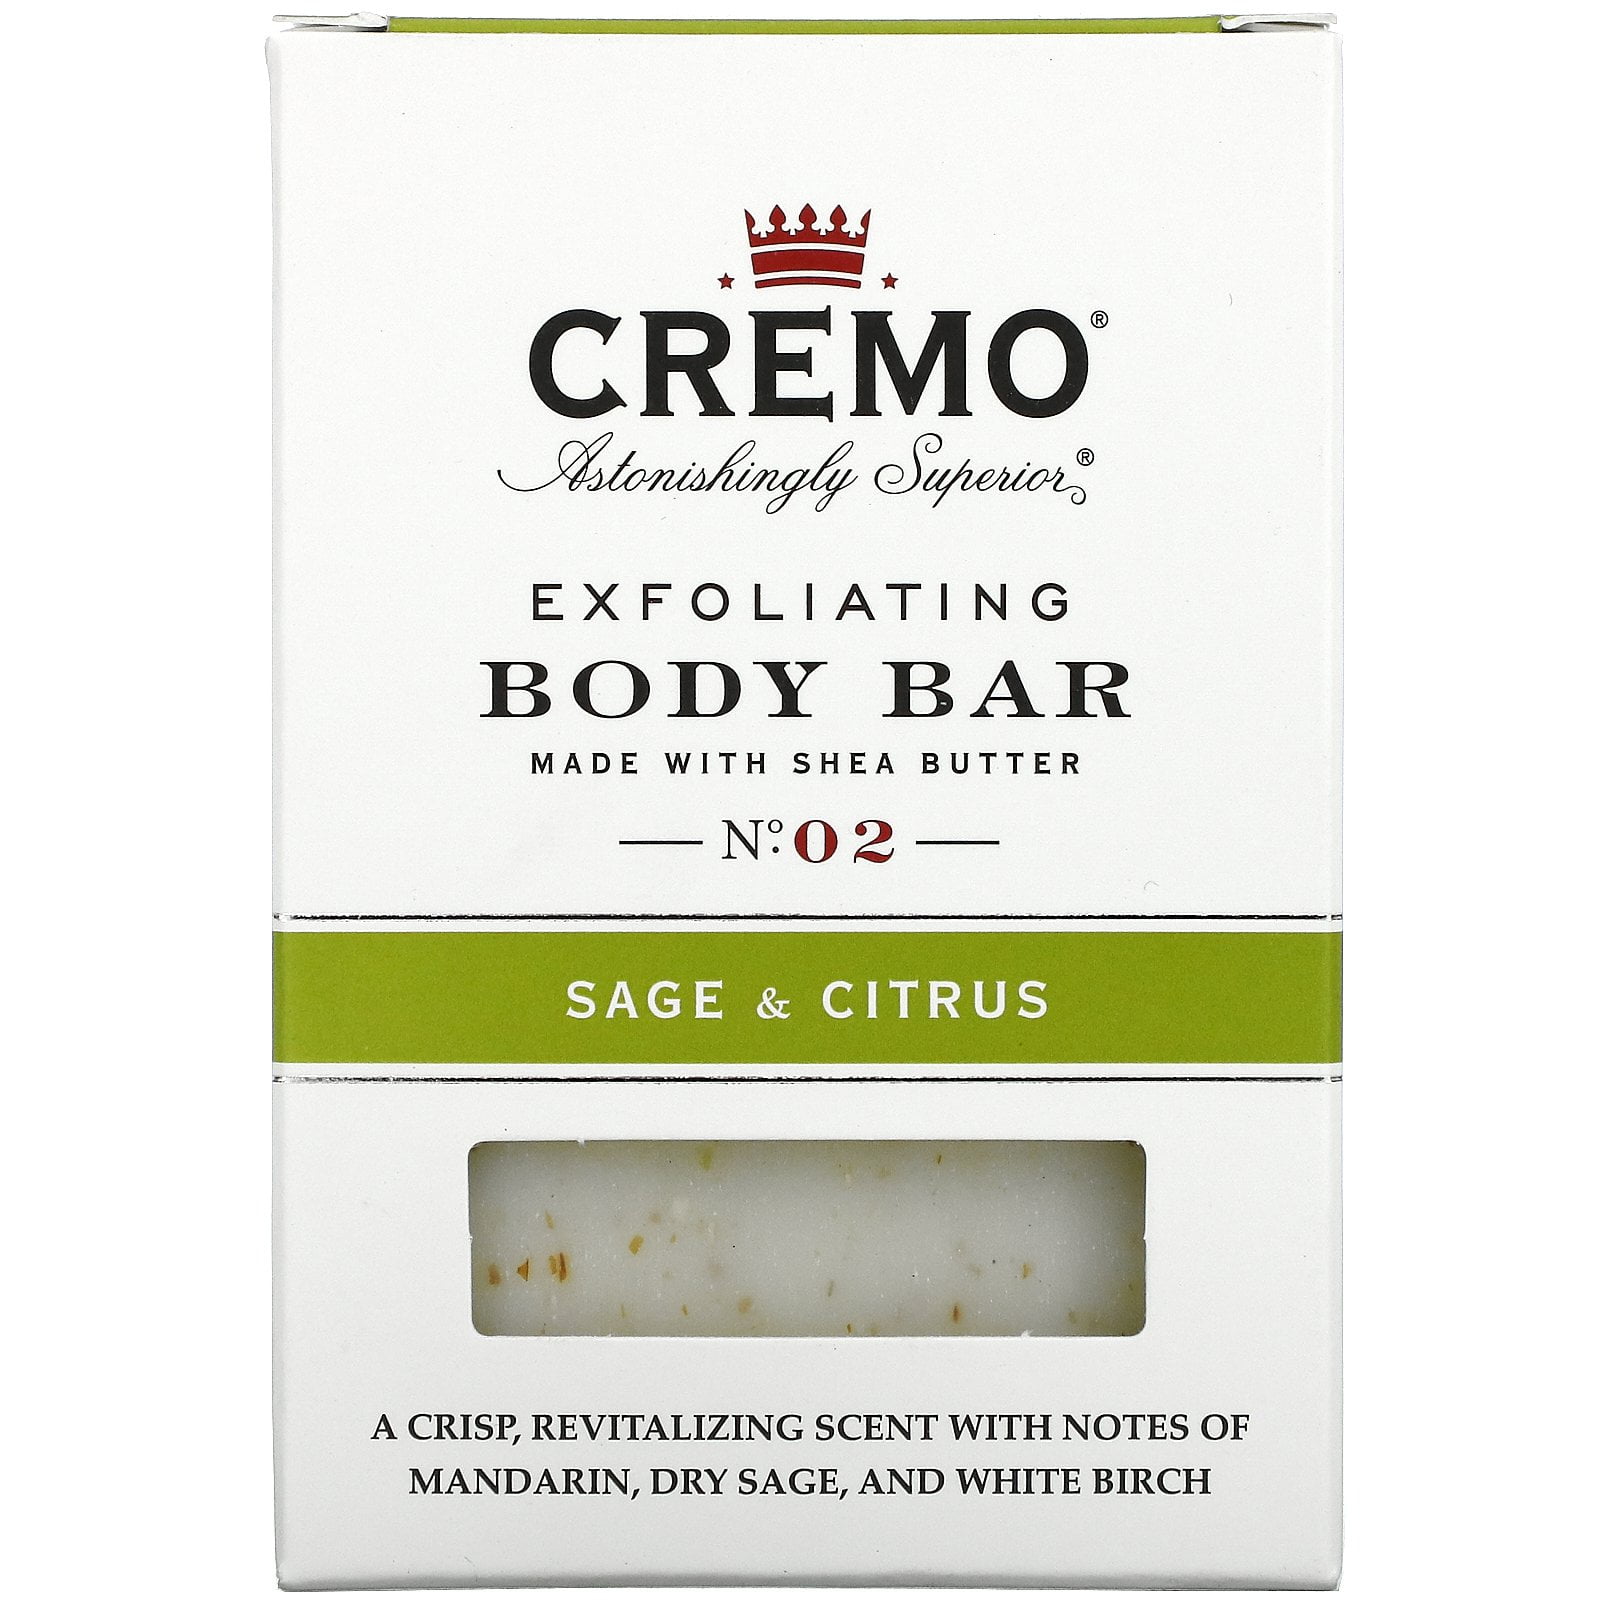 3)Cremo Exfoliating Body Bar Soap No. 4 BLUE CEDAR & CYPRESS 6oz w/ Shea  Butter